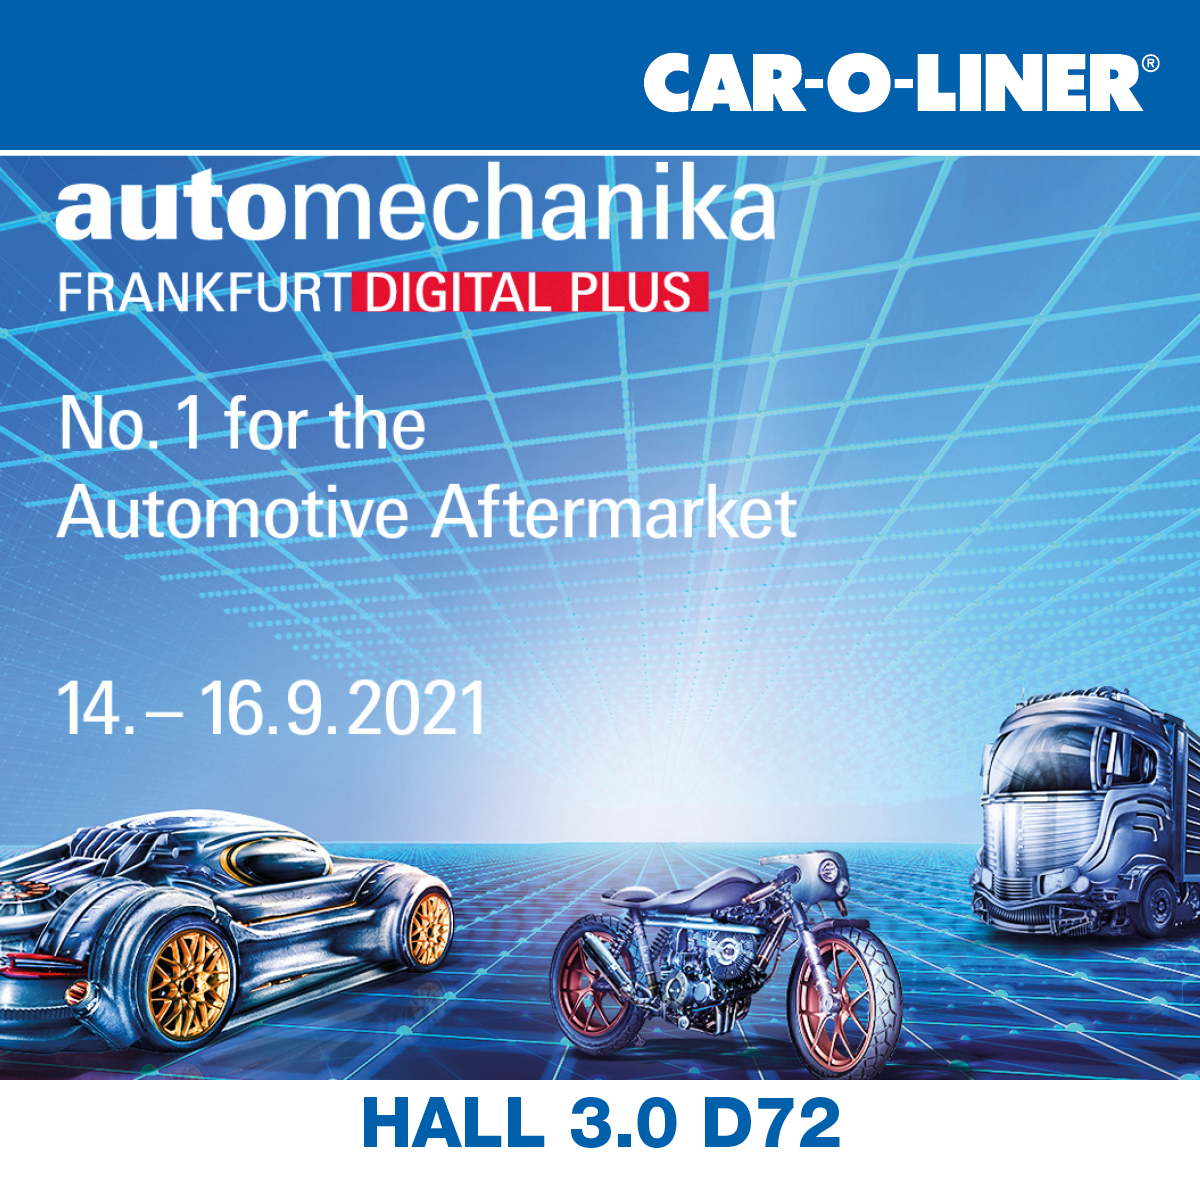 Automechanika promotional poster 2021